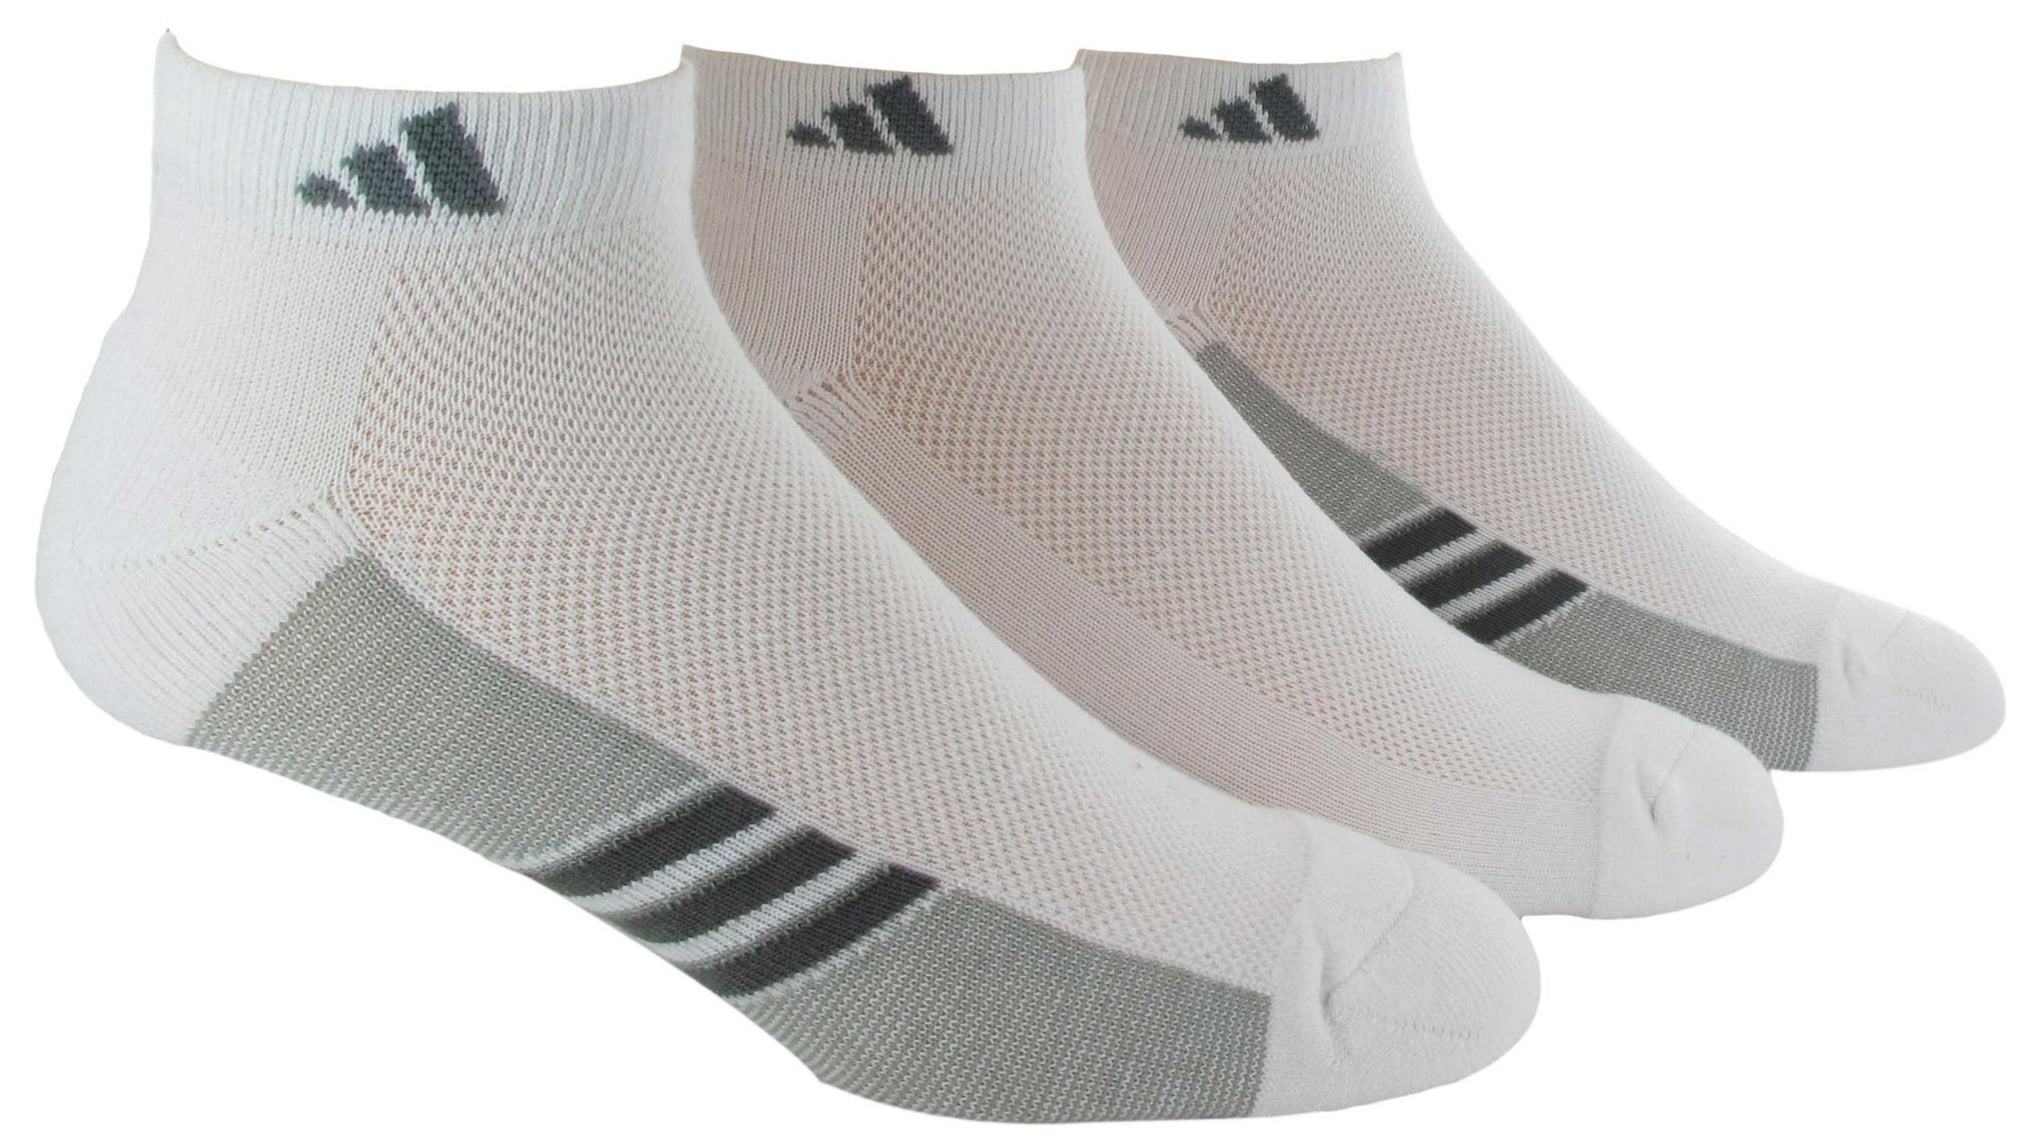 climacool socks